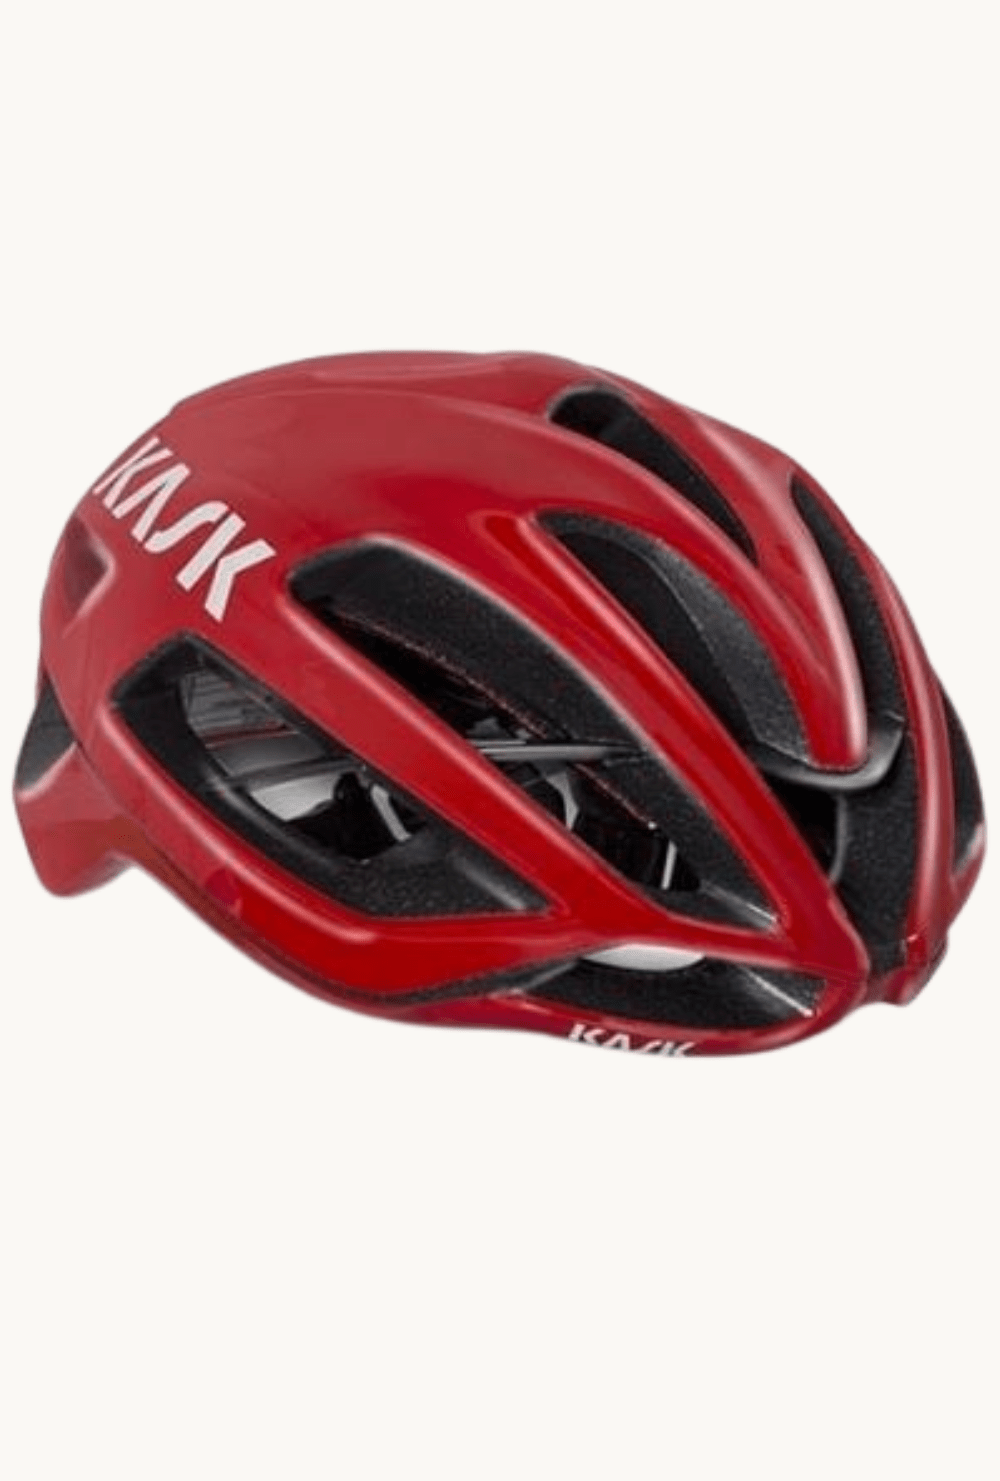 Helmet - Kask Protone Redsmall (50-56cm) / Red